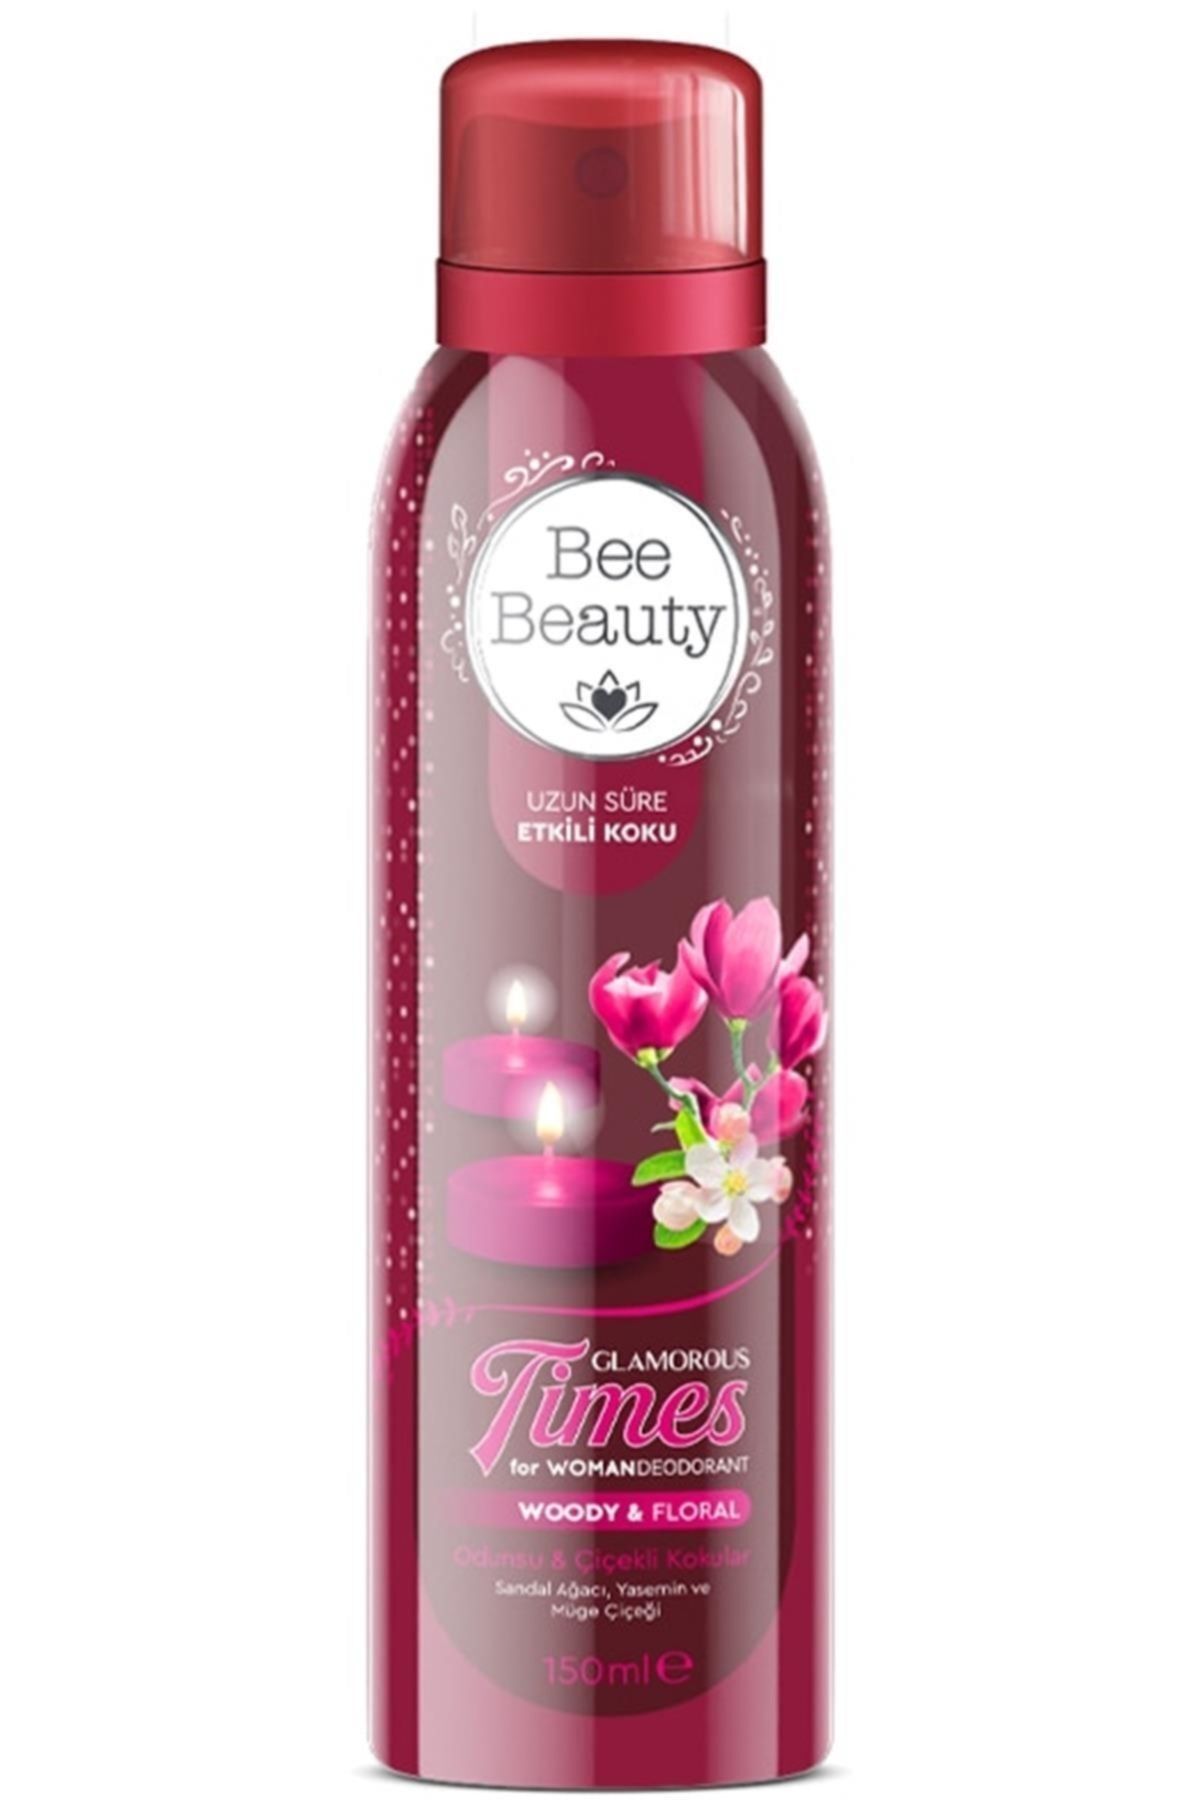 Bee Beauty Marka: Glamorous Times Kadın Deodorant 150 Ml Kategori: Deodorant